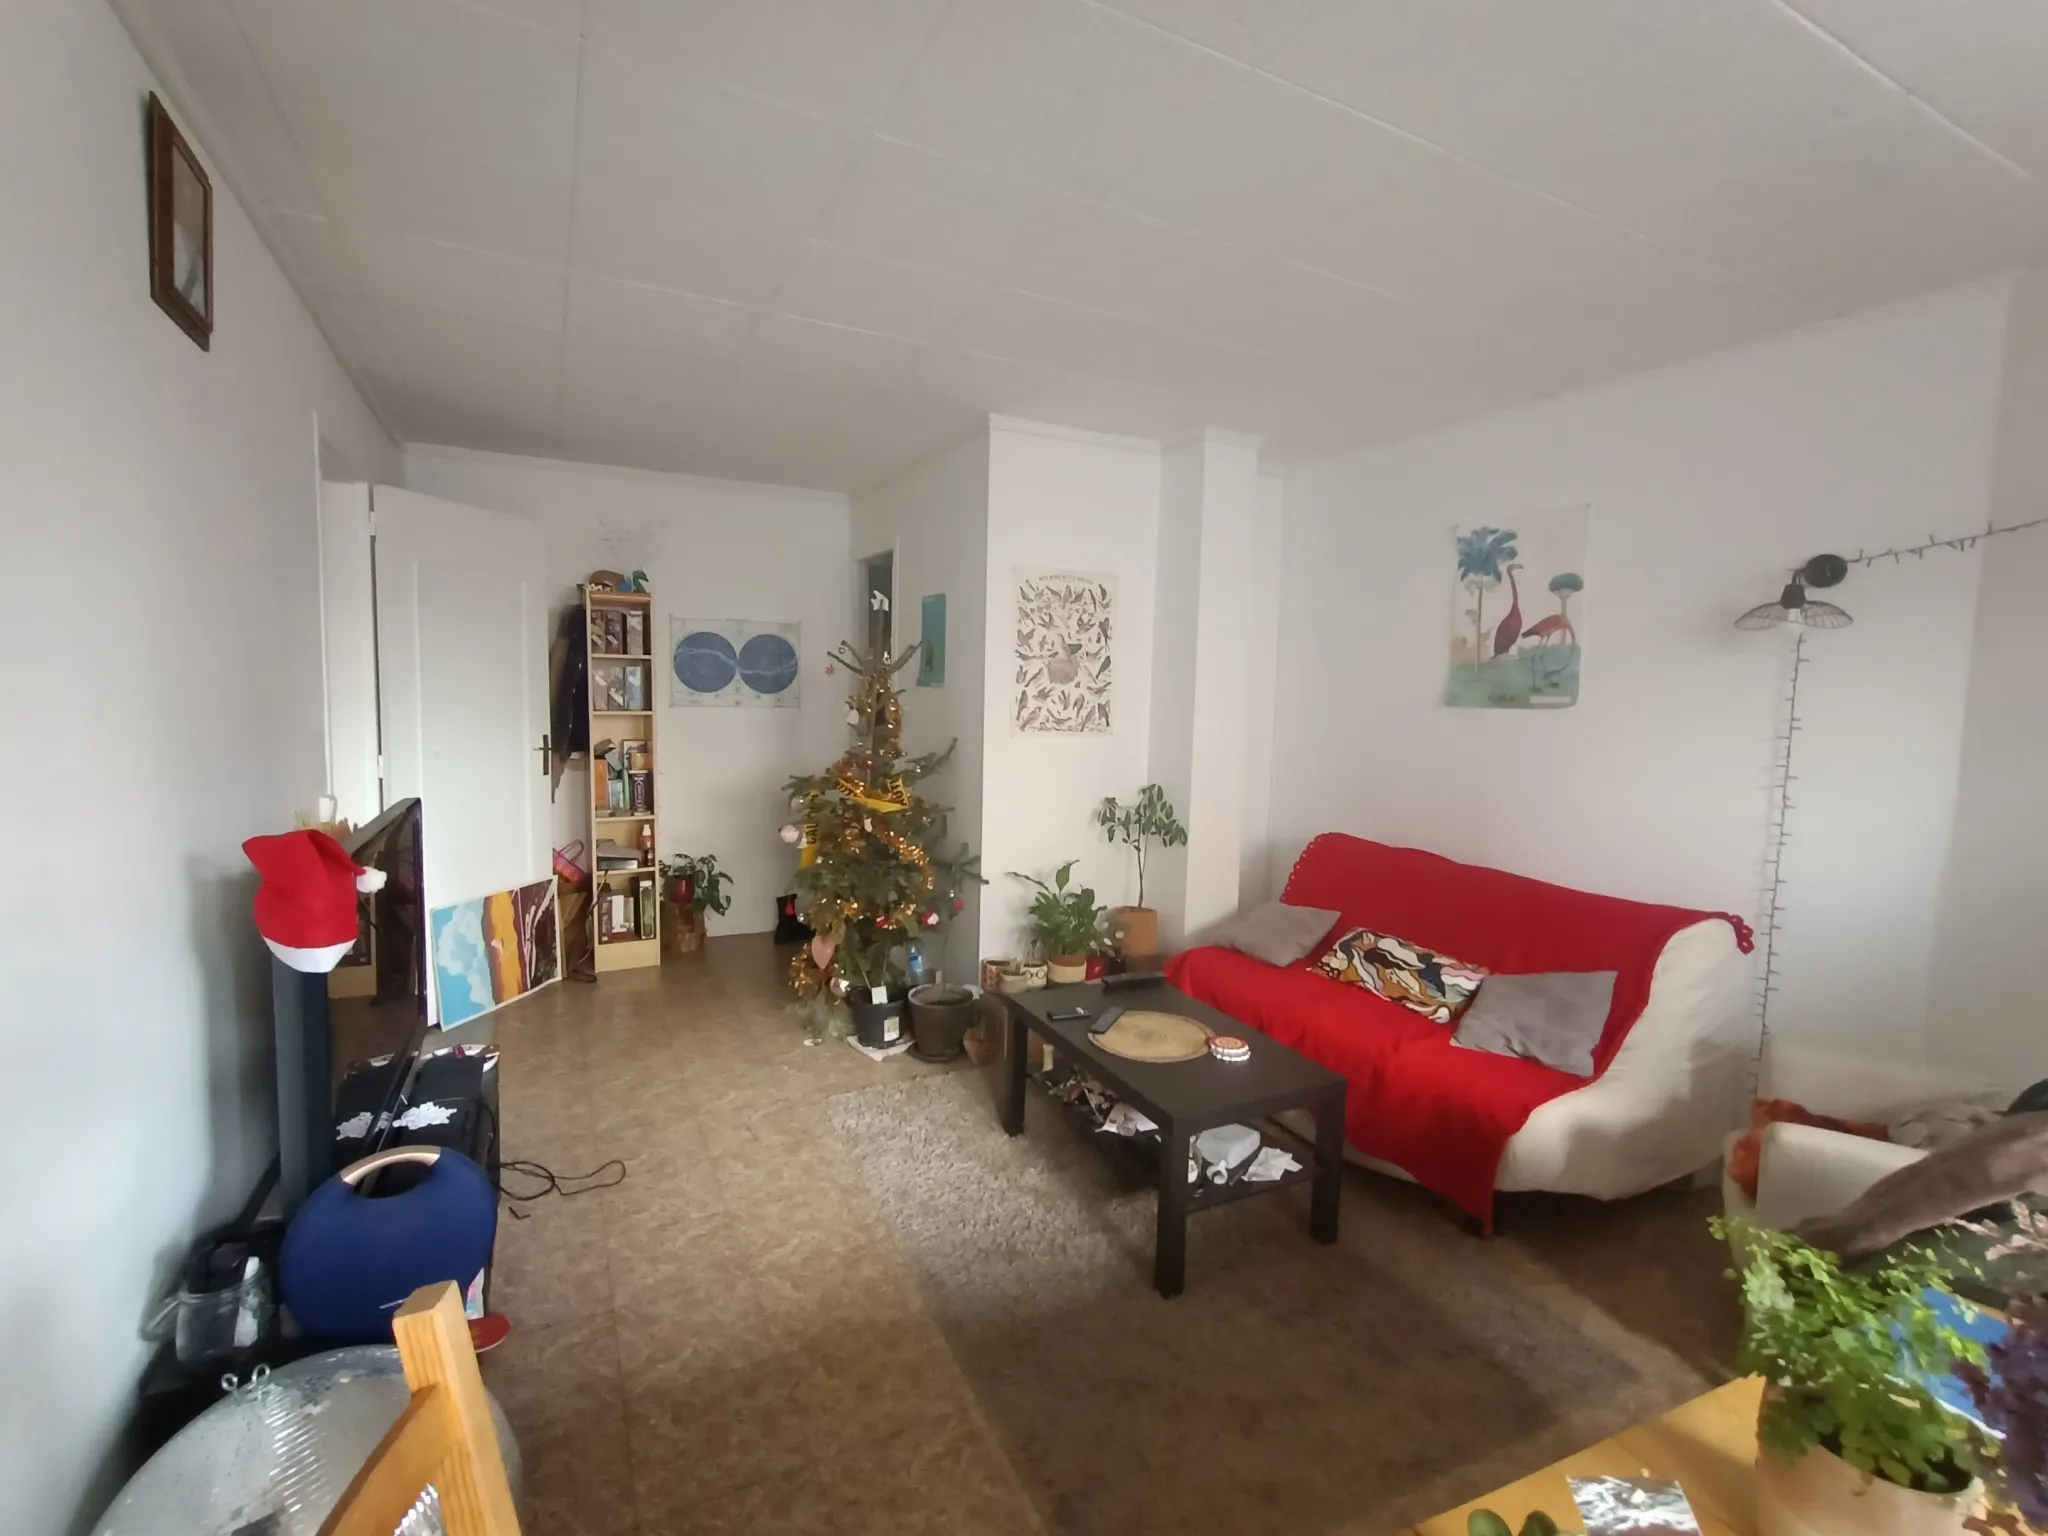 Appartement familial lumineux avec 3 chambres - Montpellier 